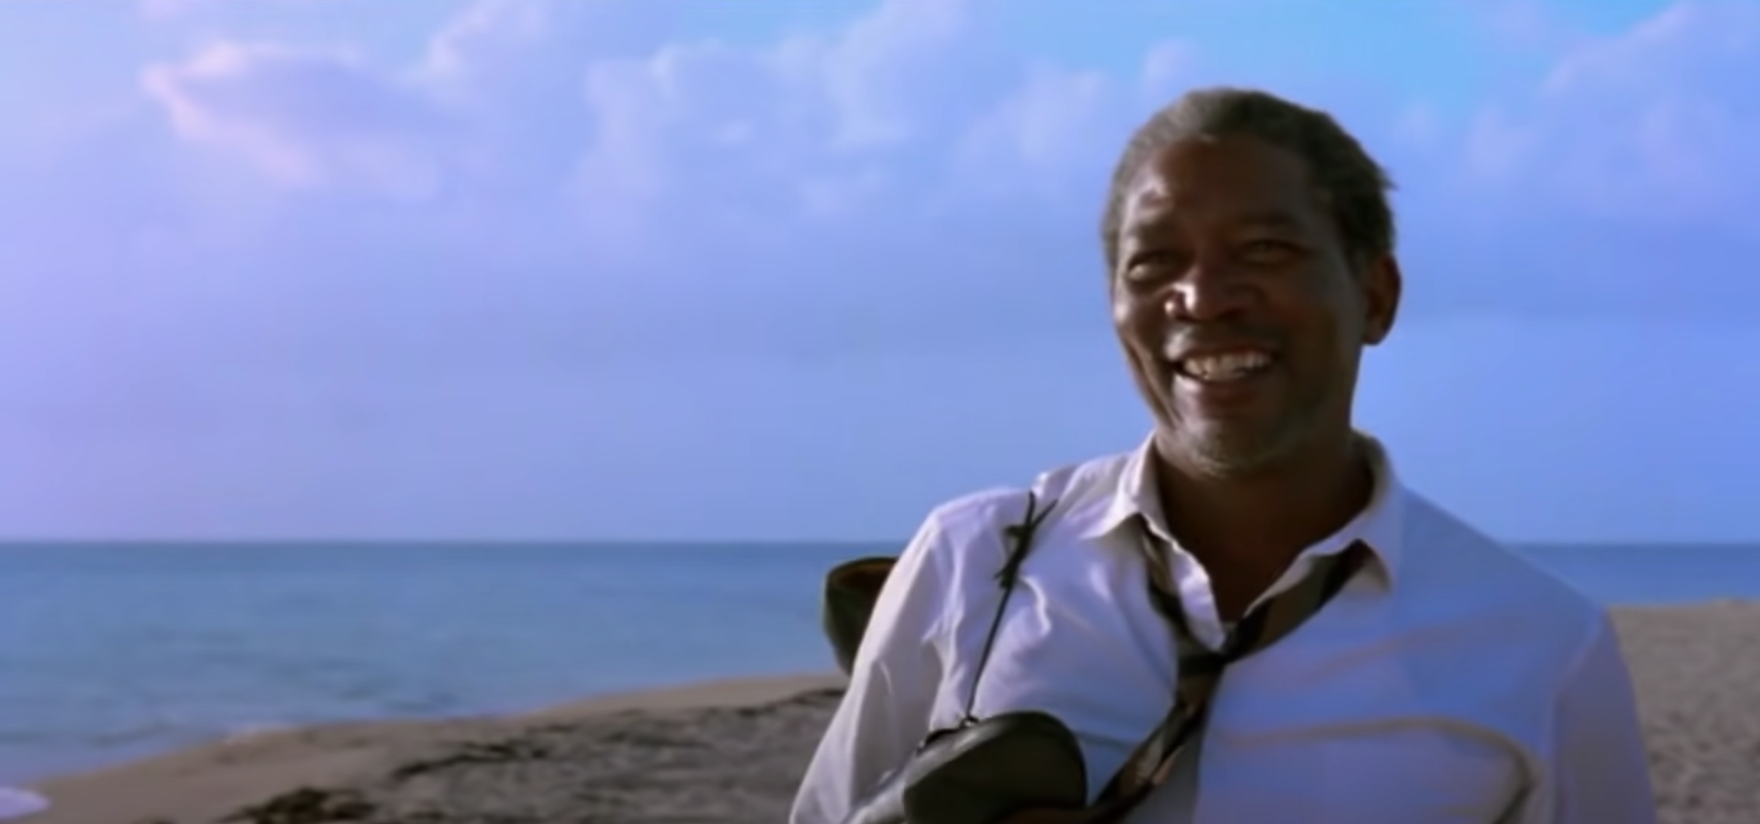 A man, smiling, walks on a beach